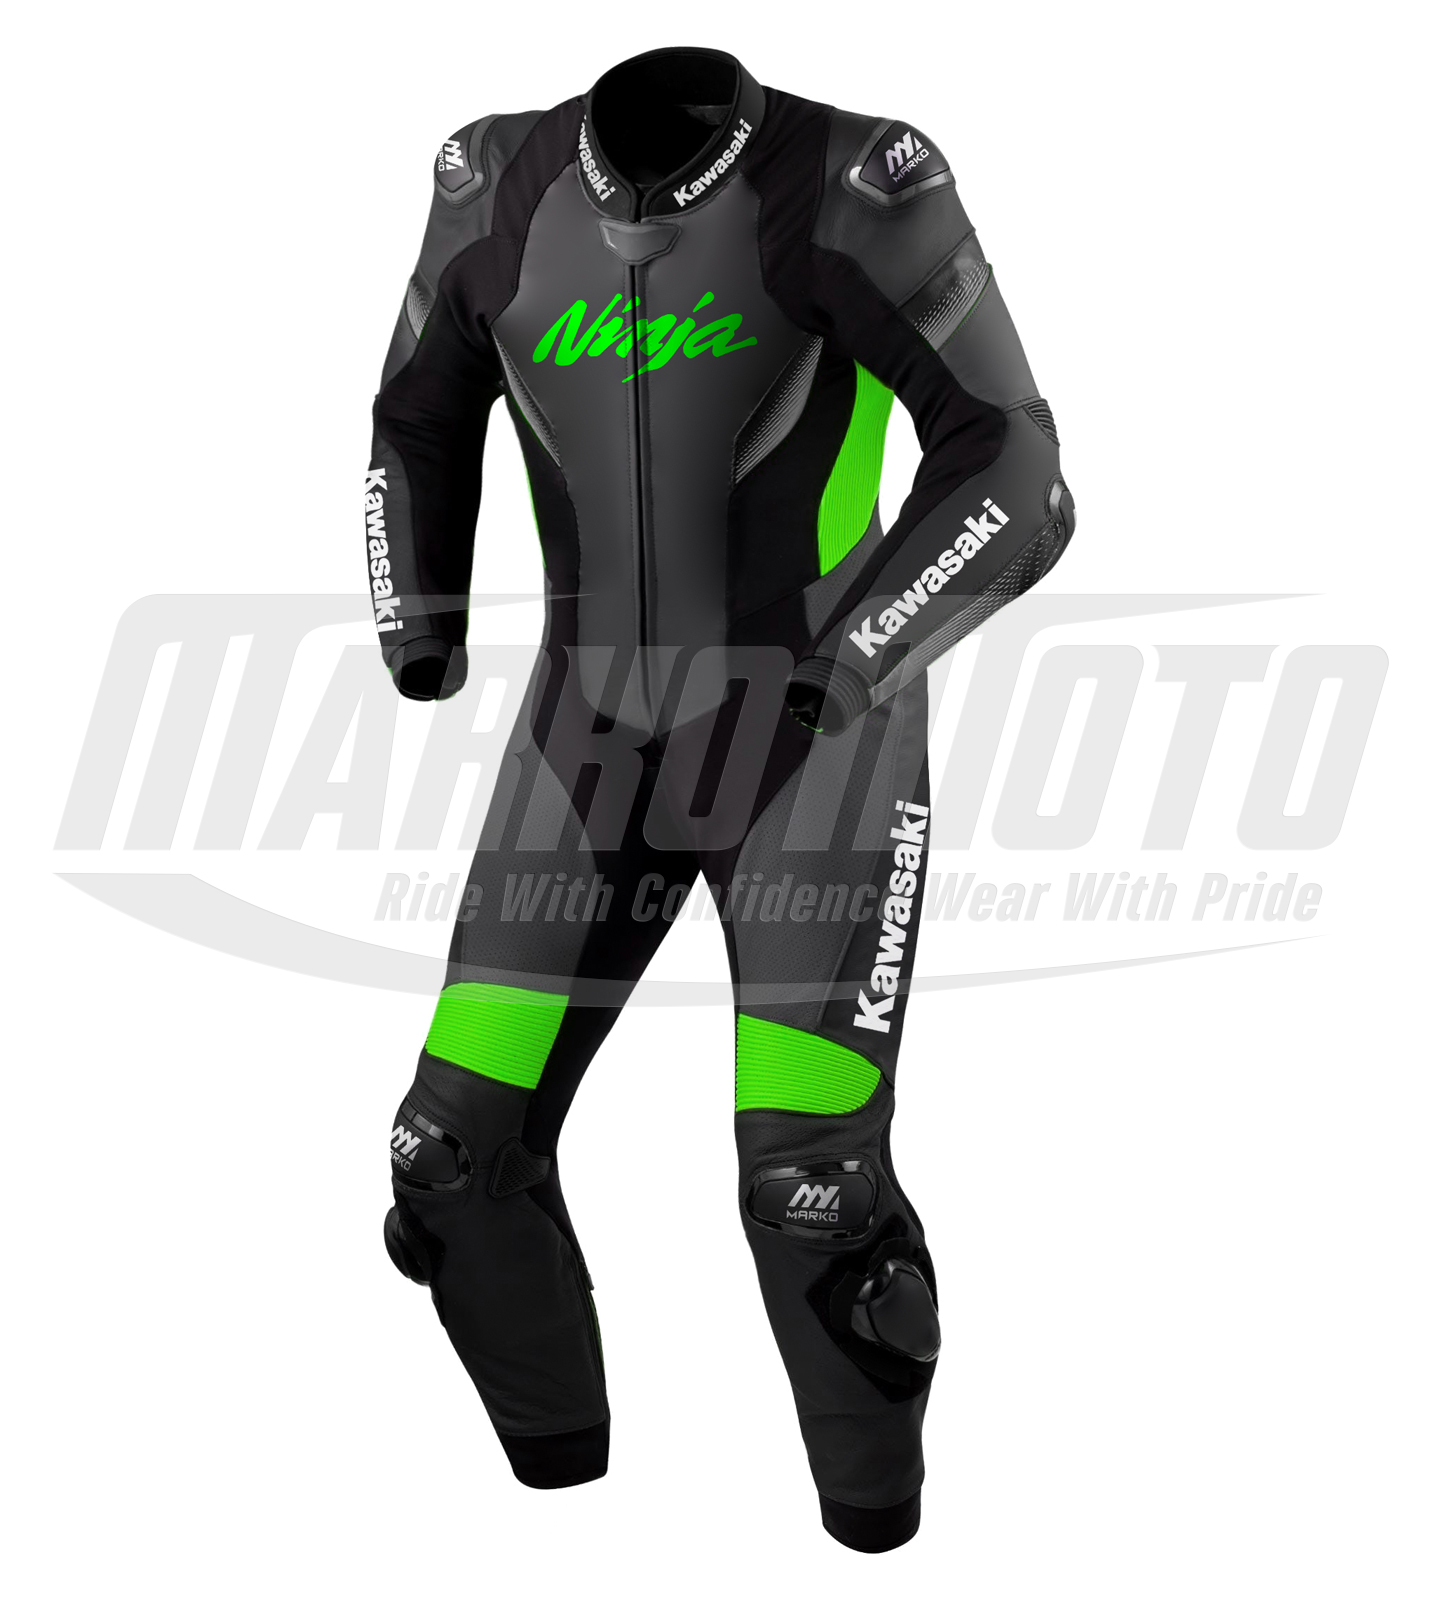 Pro Kawasaki Ninja ZX-10R Motorcycle Racing Leather Suit 1pc & 2pcs